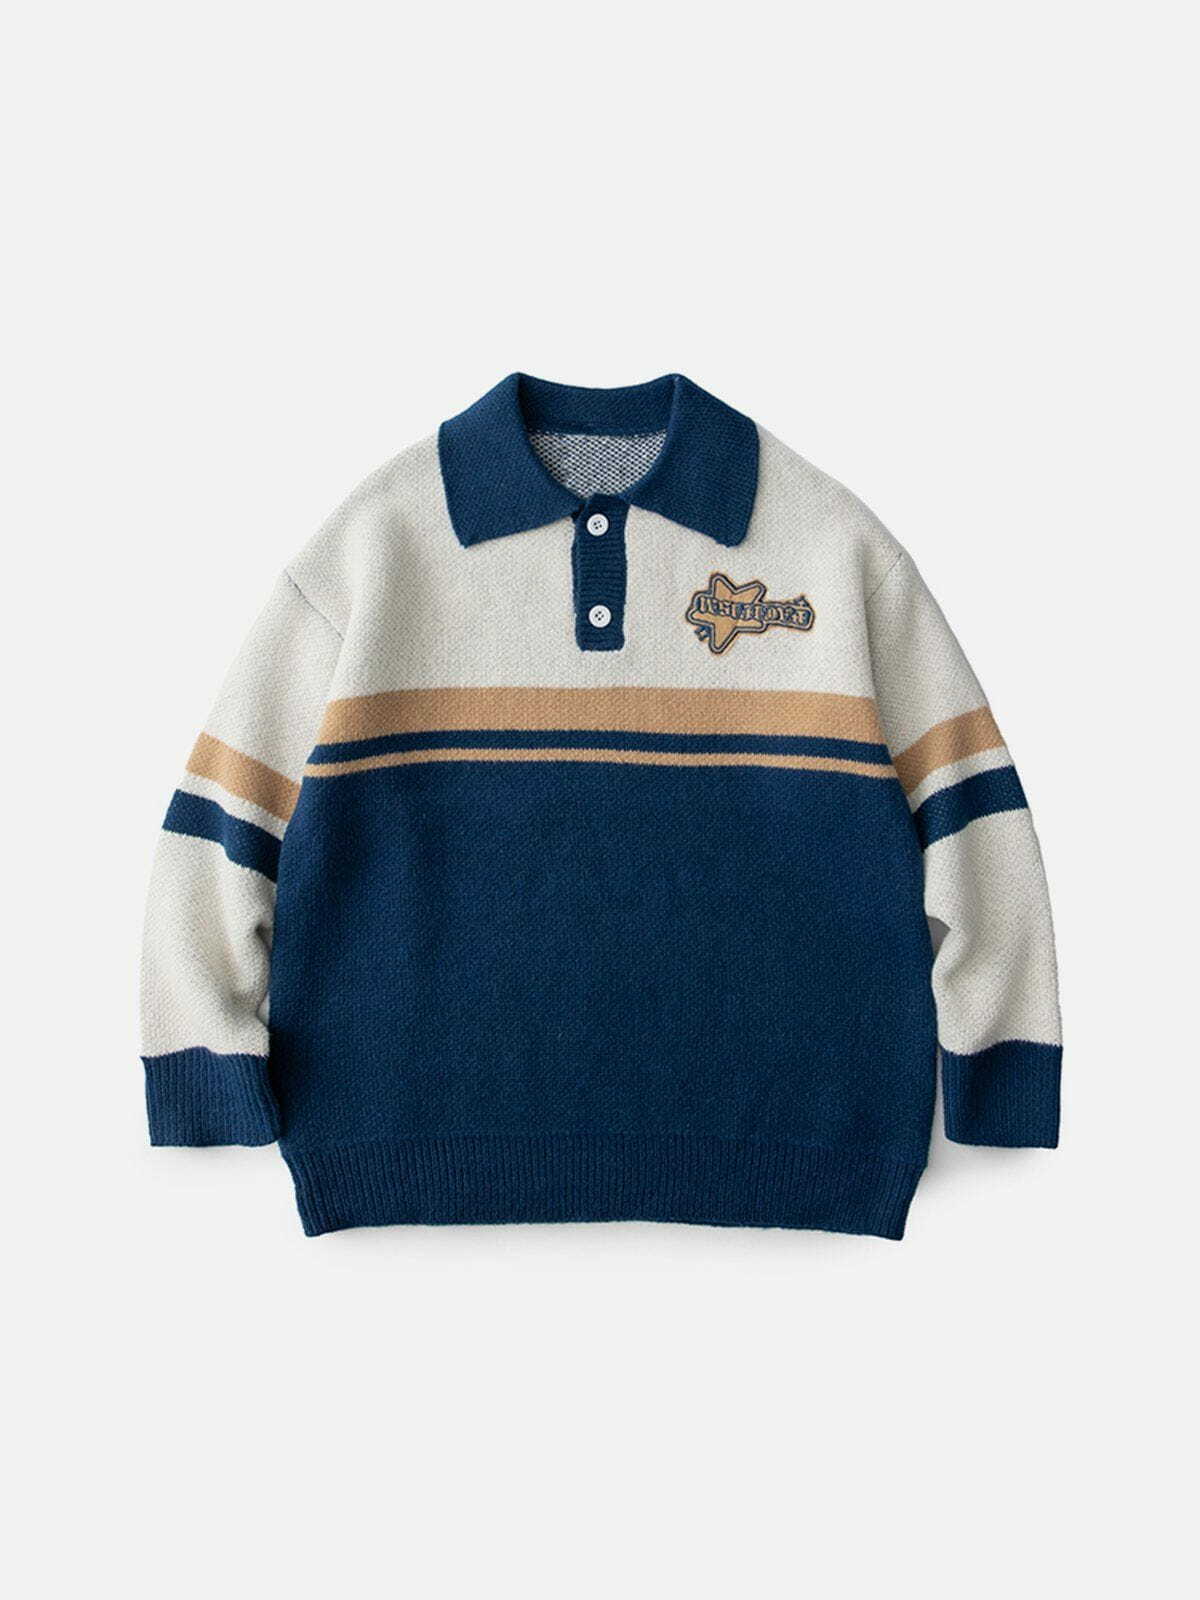 stars knit polo sweater chic streetwear staple 7574